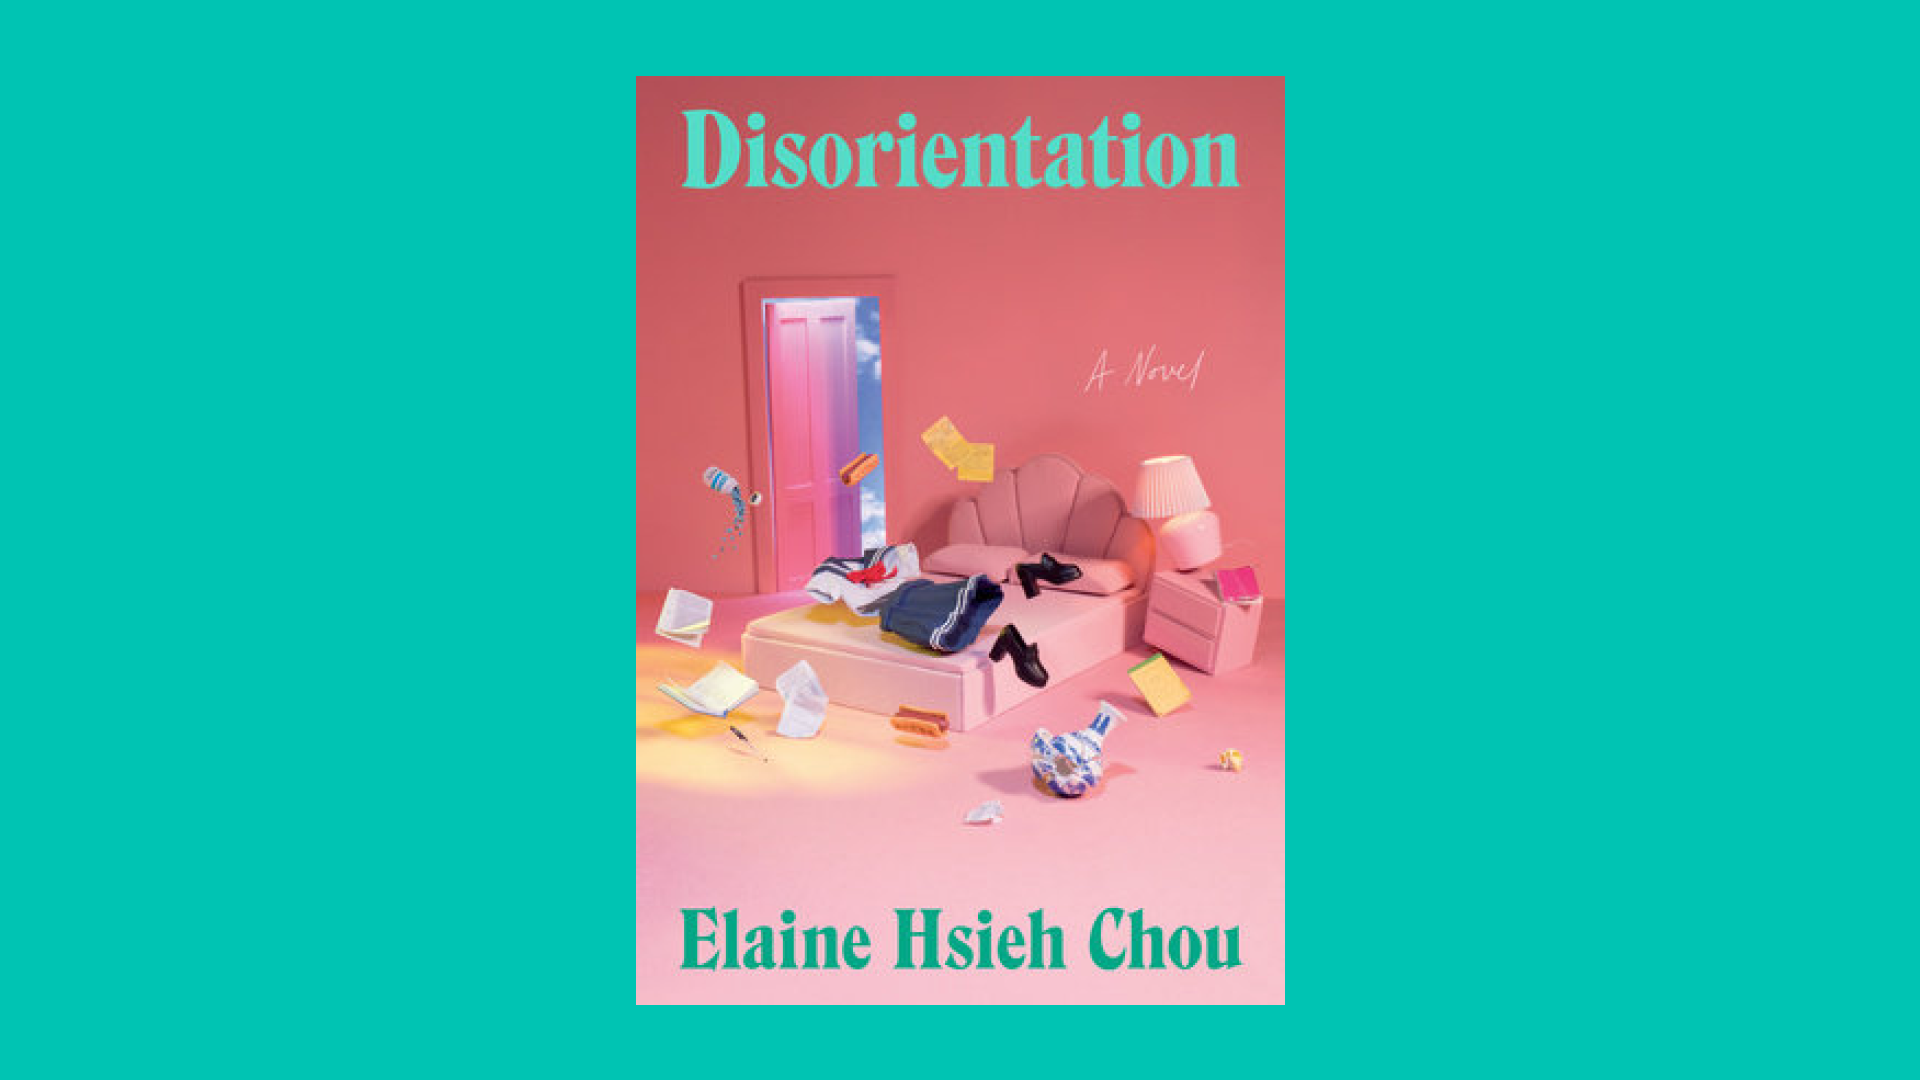 “Disorientation” by Elaine Hsieh Chou